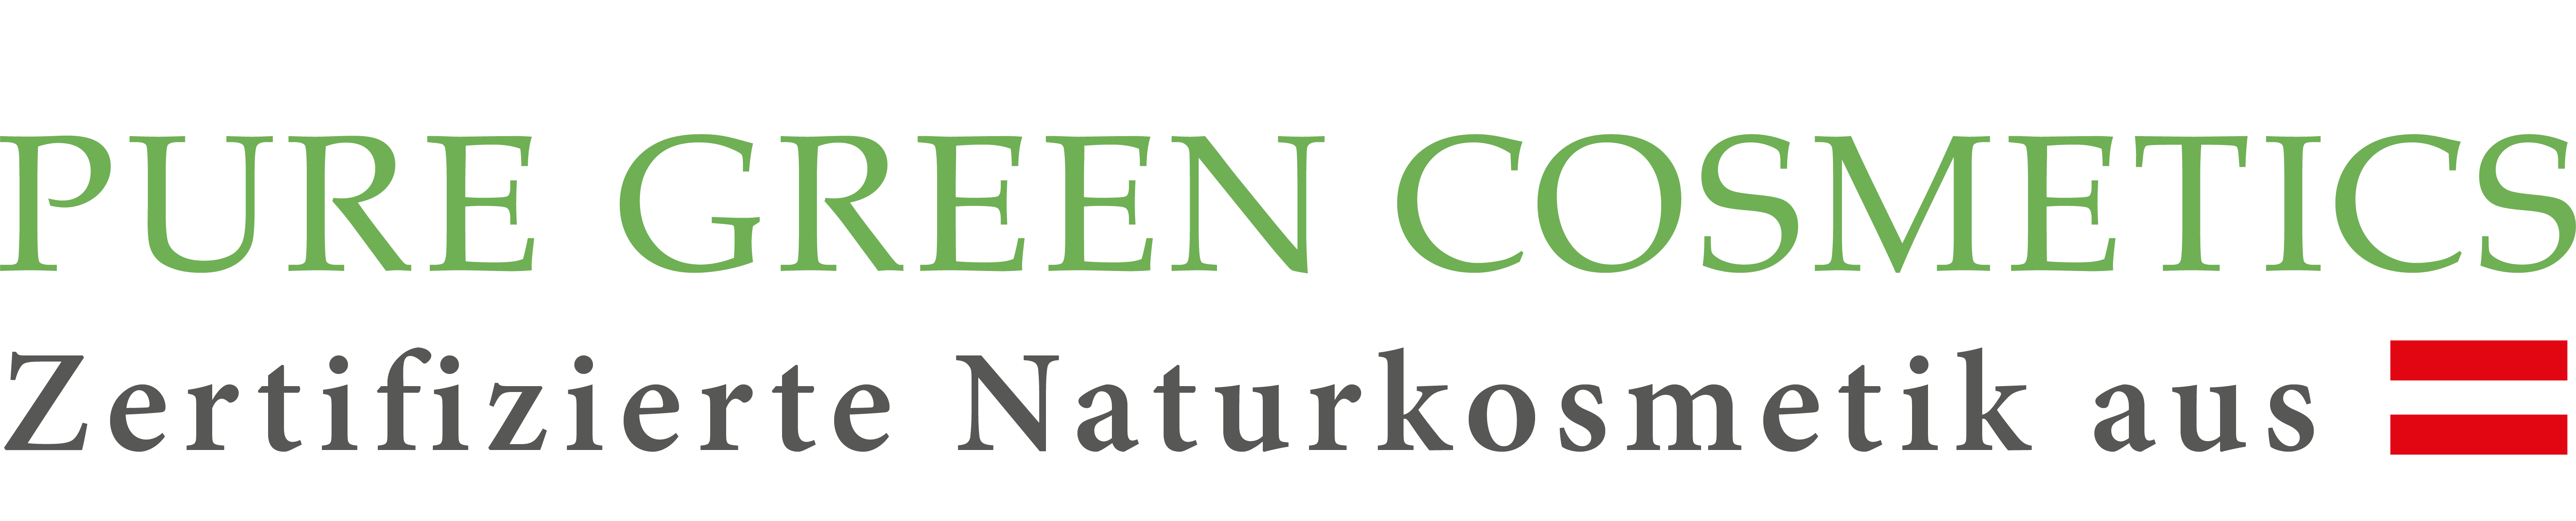 Pure Green Cosmetics Logo